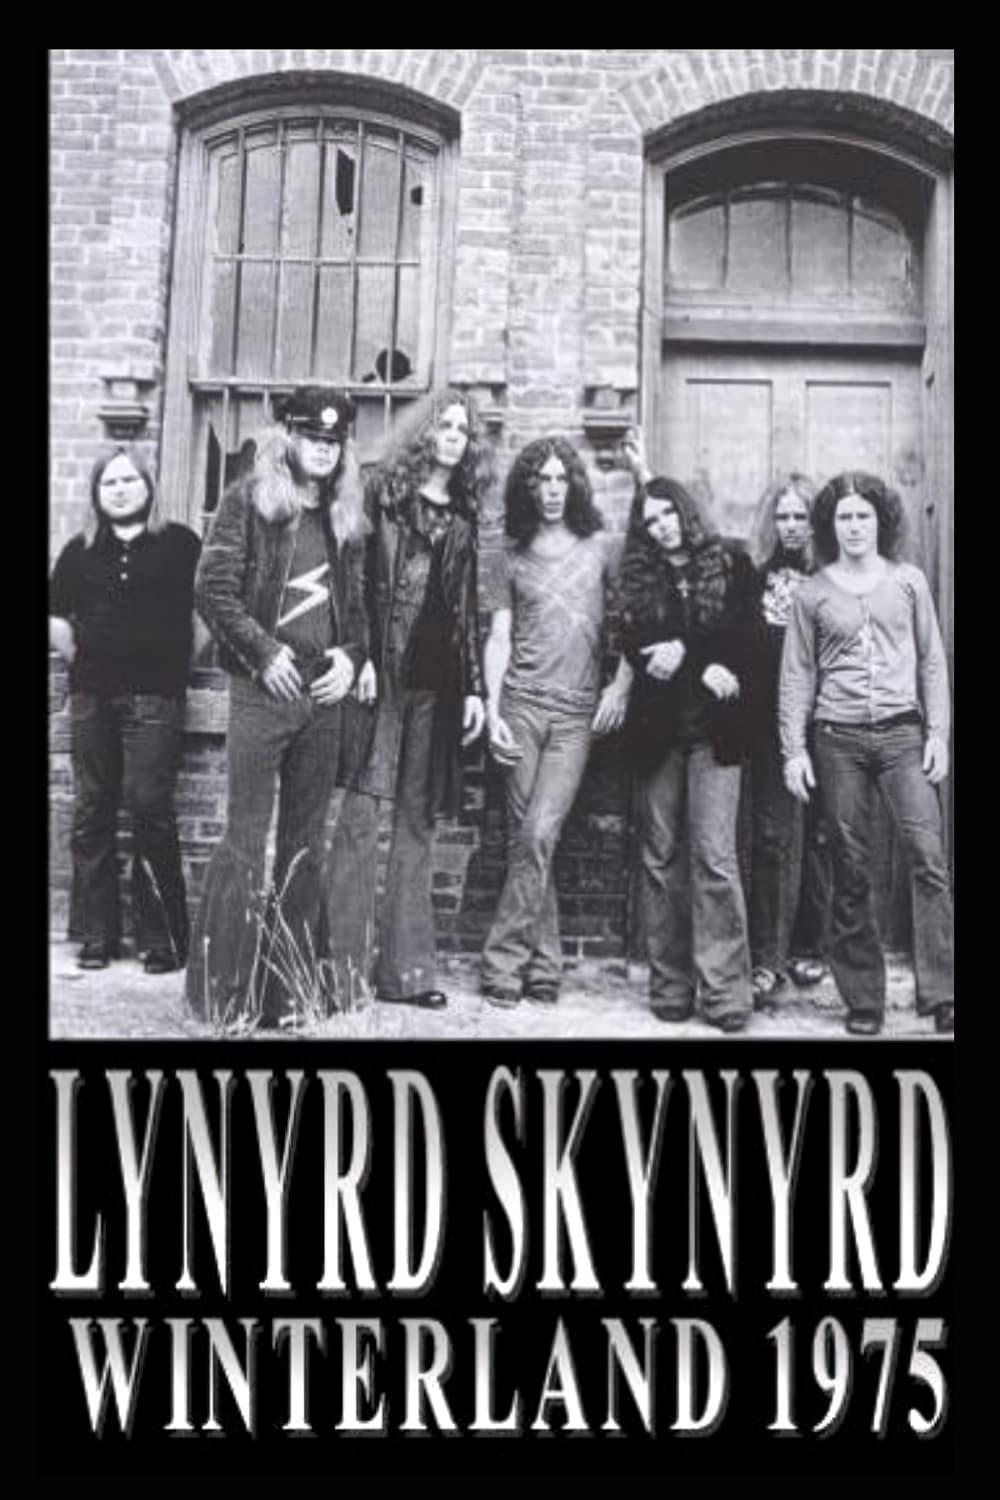 Lynyrd Skynyrd : Live at Winterland 1975 poster